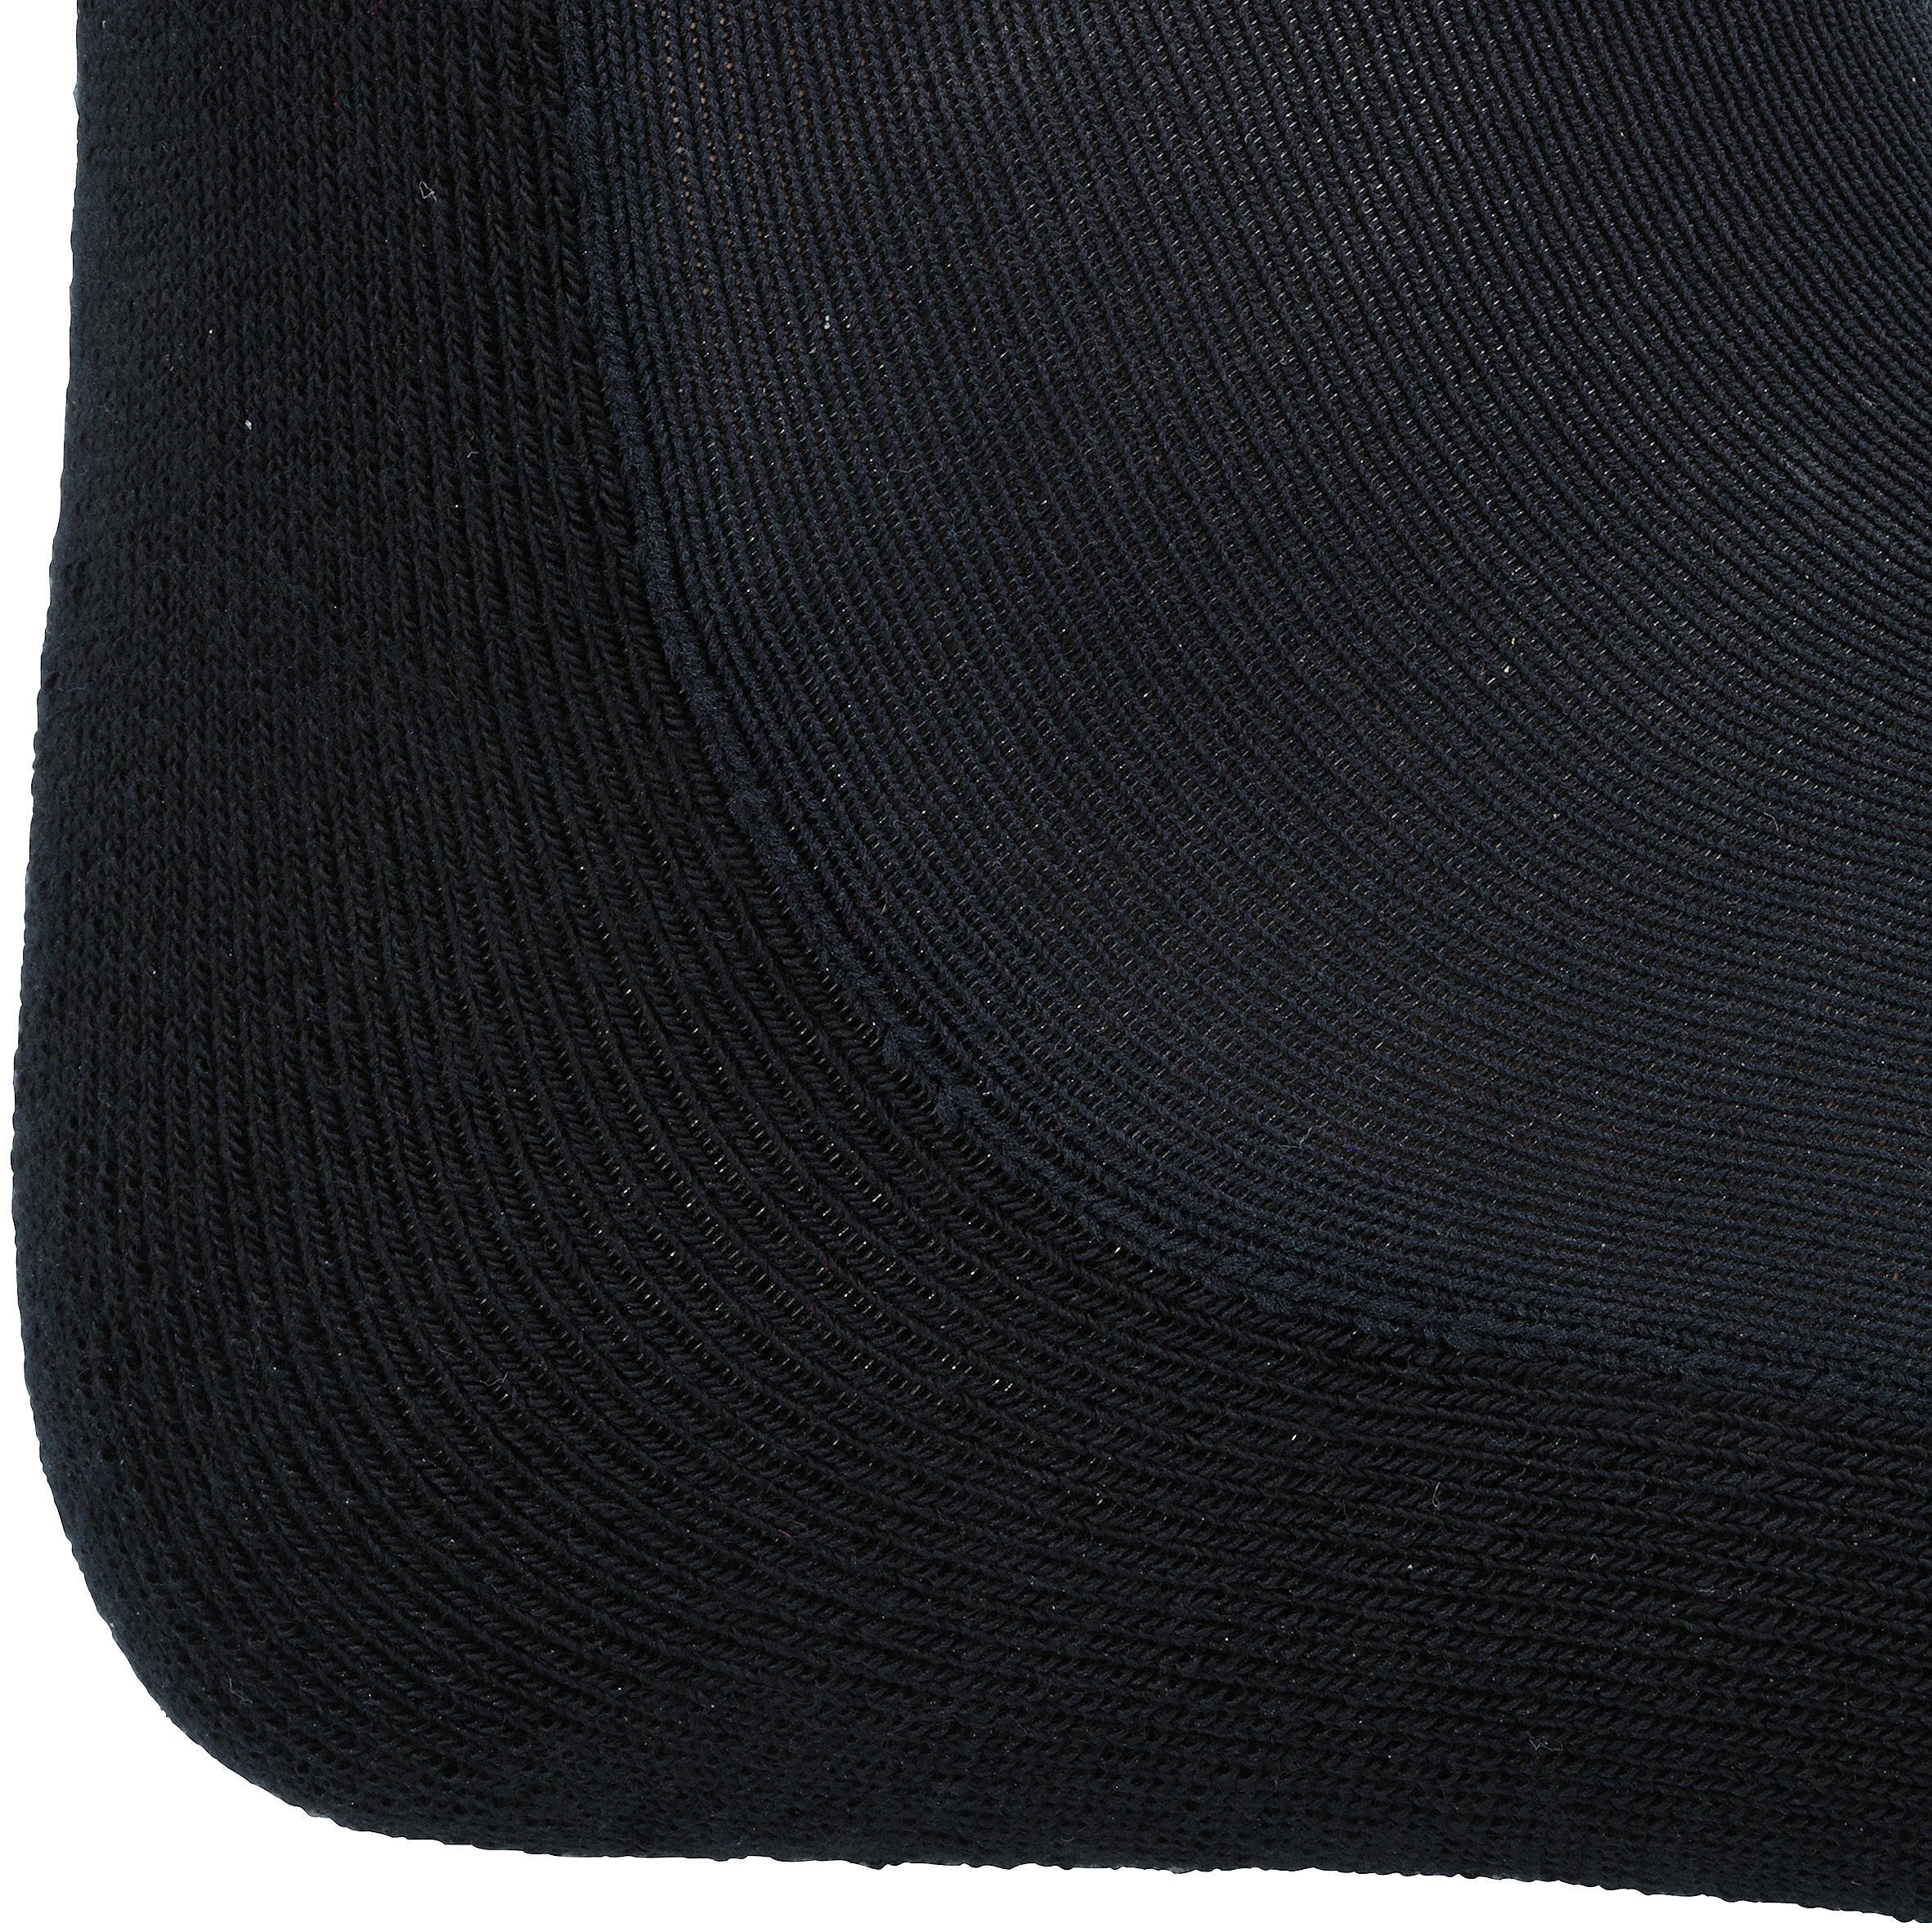 Adult Horse Riding Socks SKS100 - Black/White and Grey Stripes 4/6